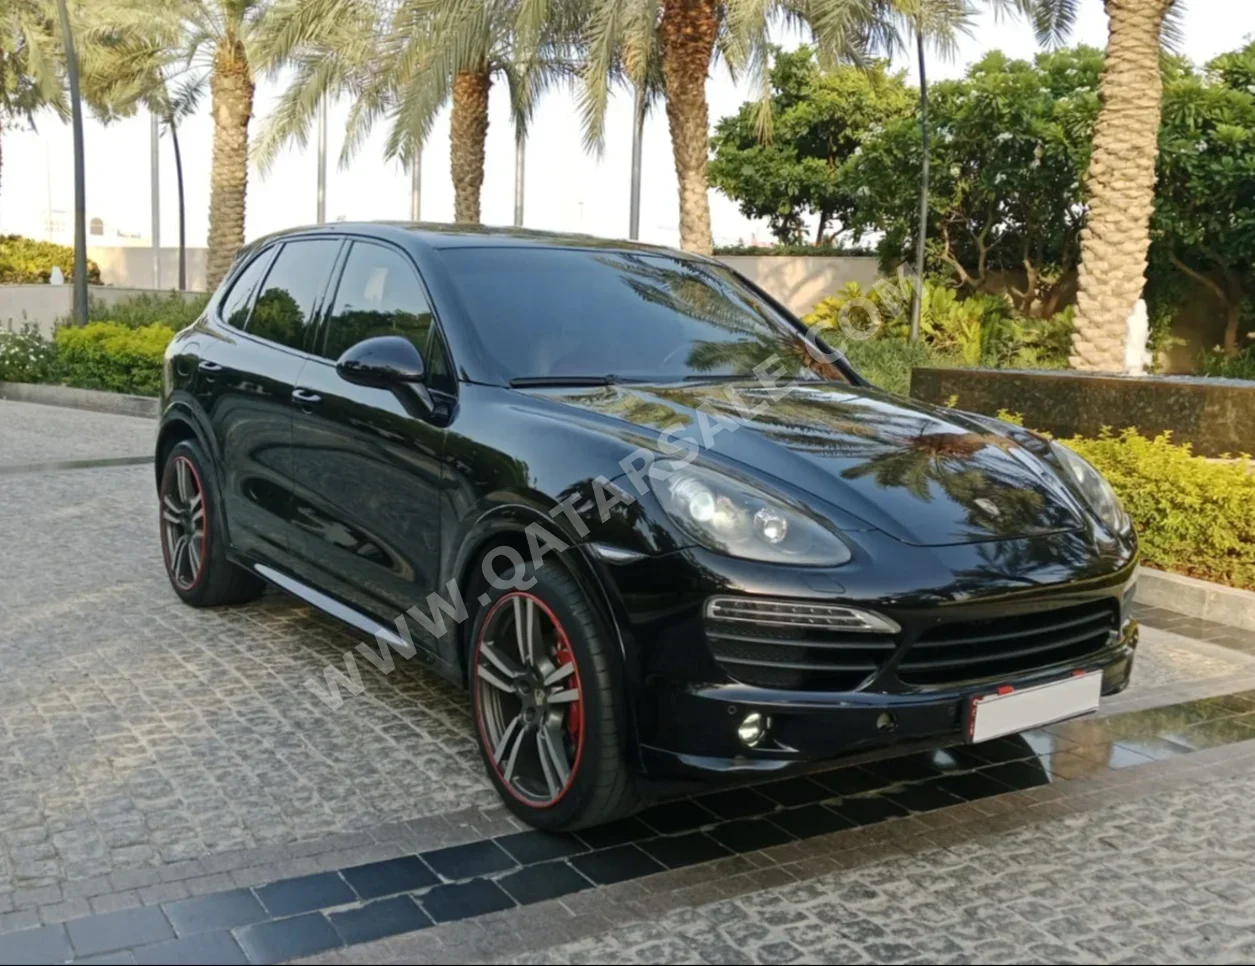 Porsche  Cayenne  S  2013  Automatic  135,000 Km  6 Cylinder  Four Wheel Drive (4WD)  SUV  Black